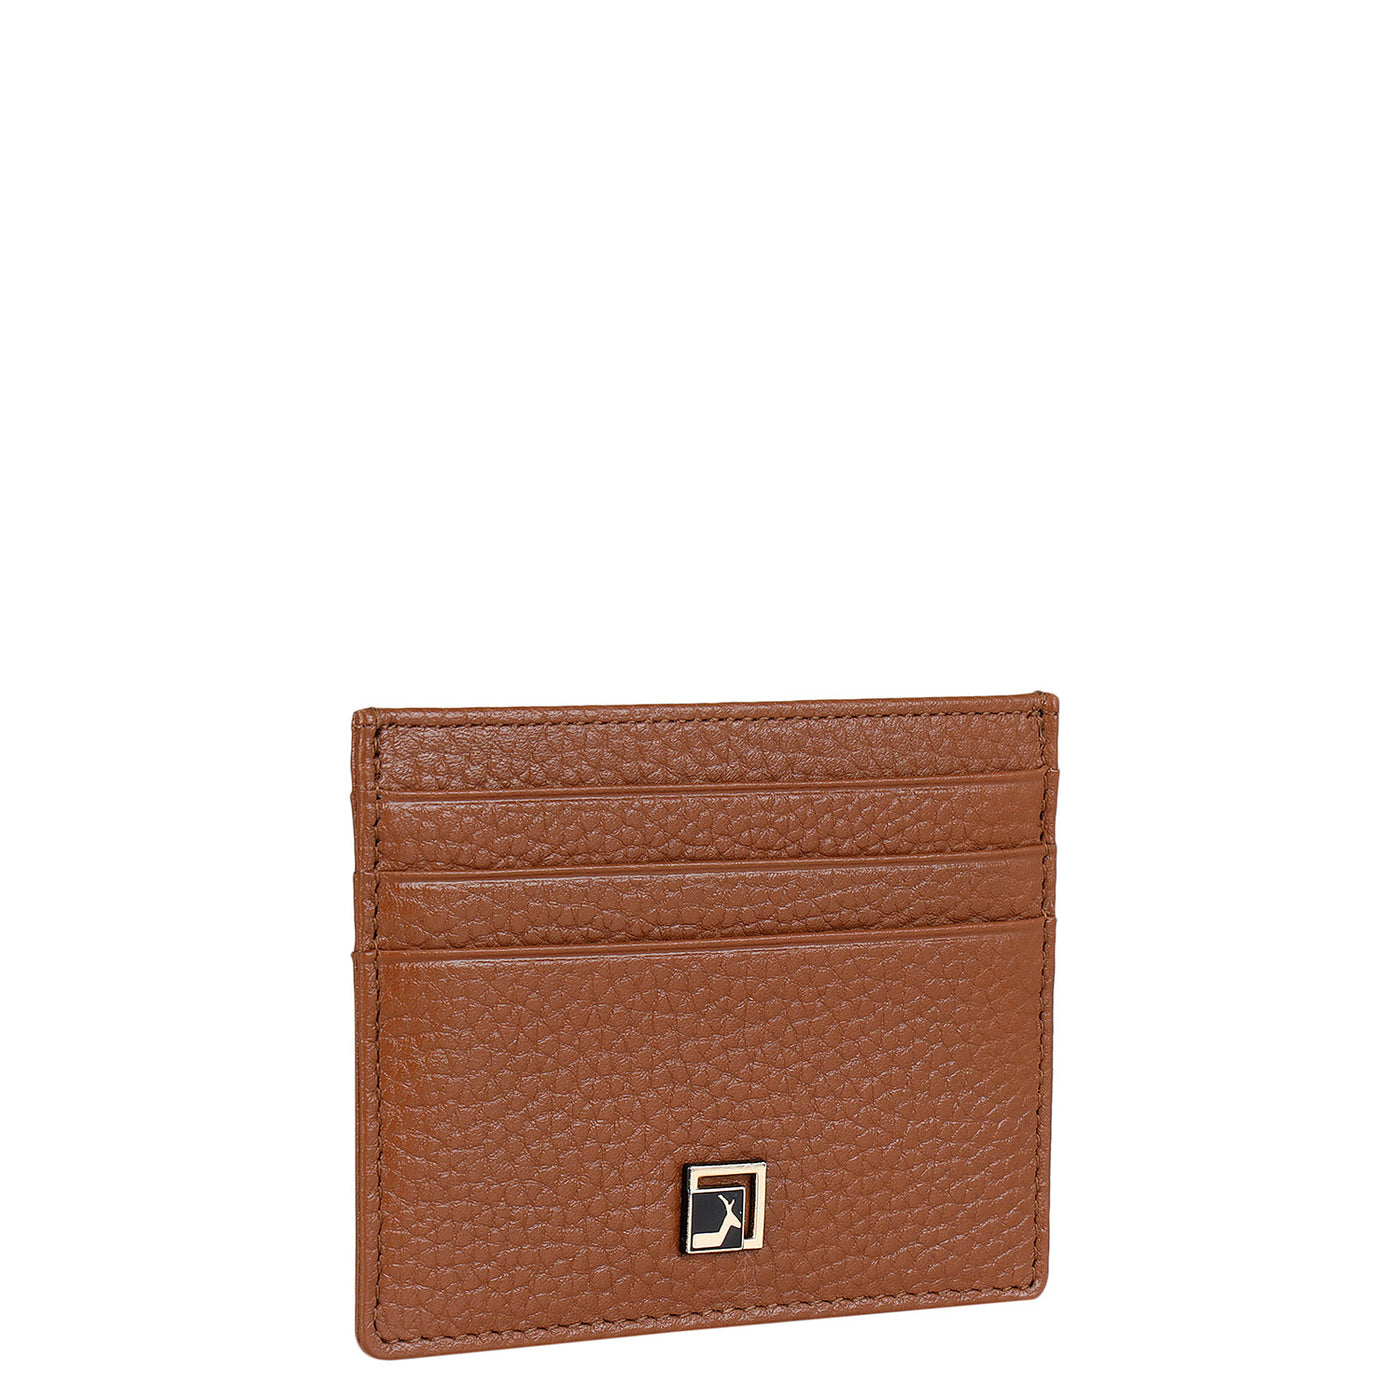 Wax Leather Card Case - Caramel